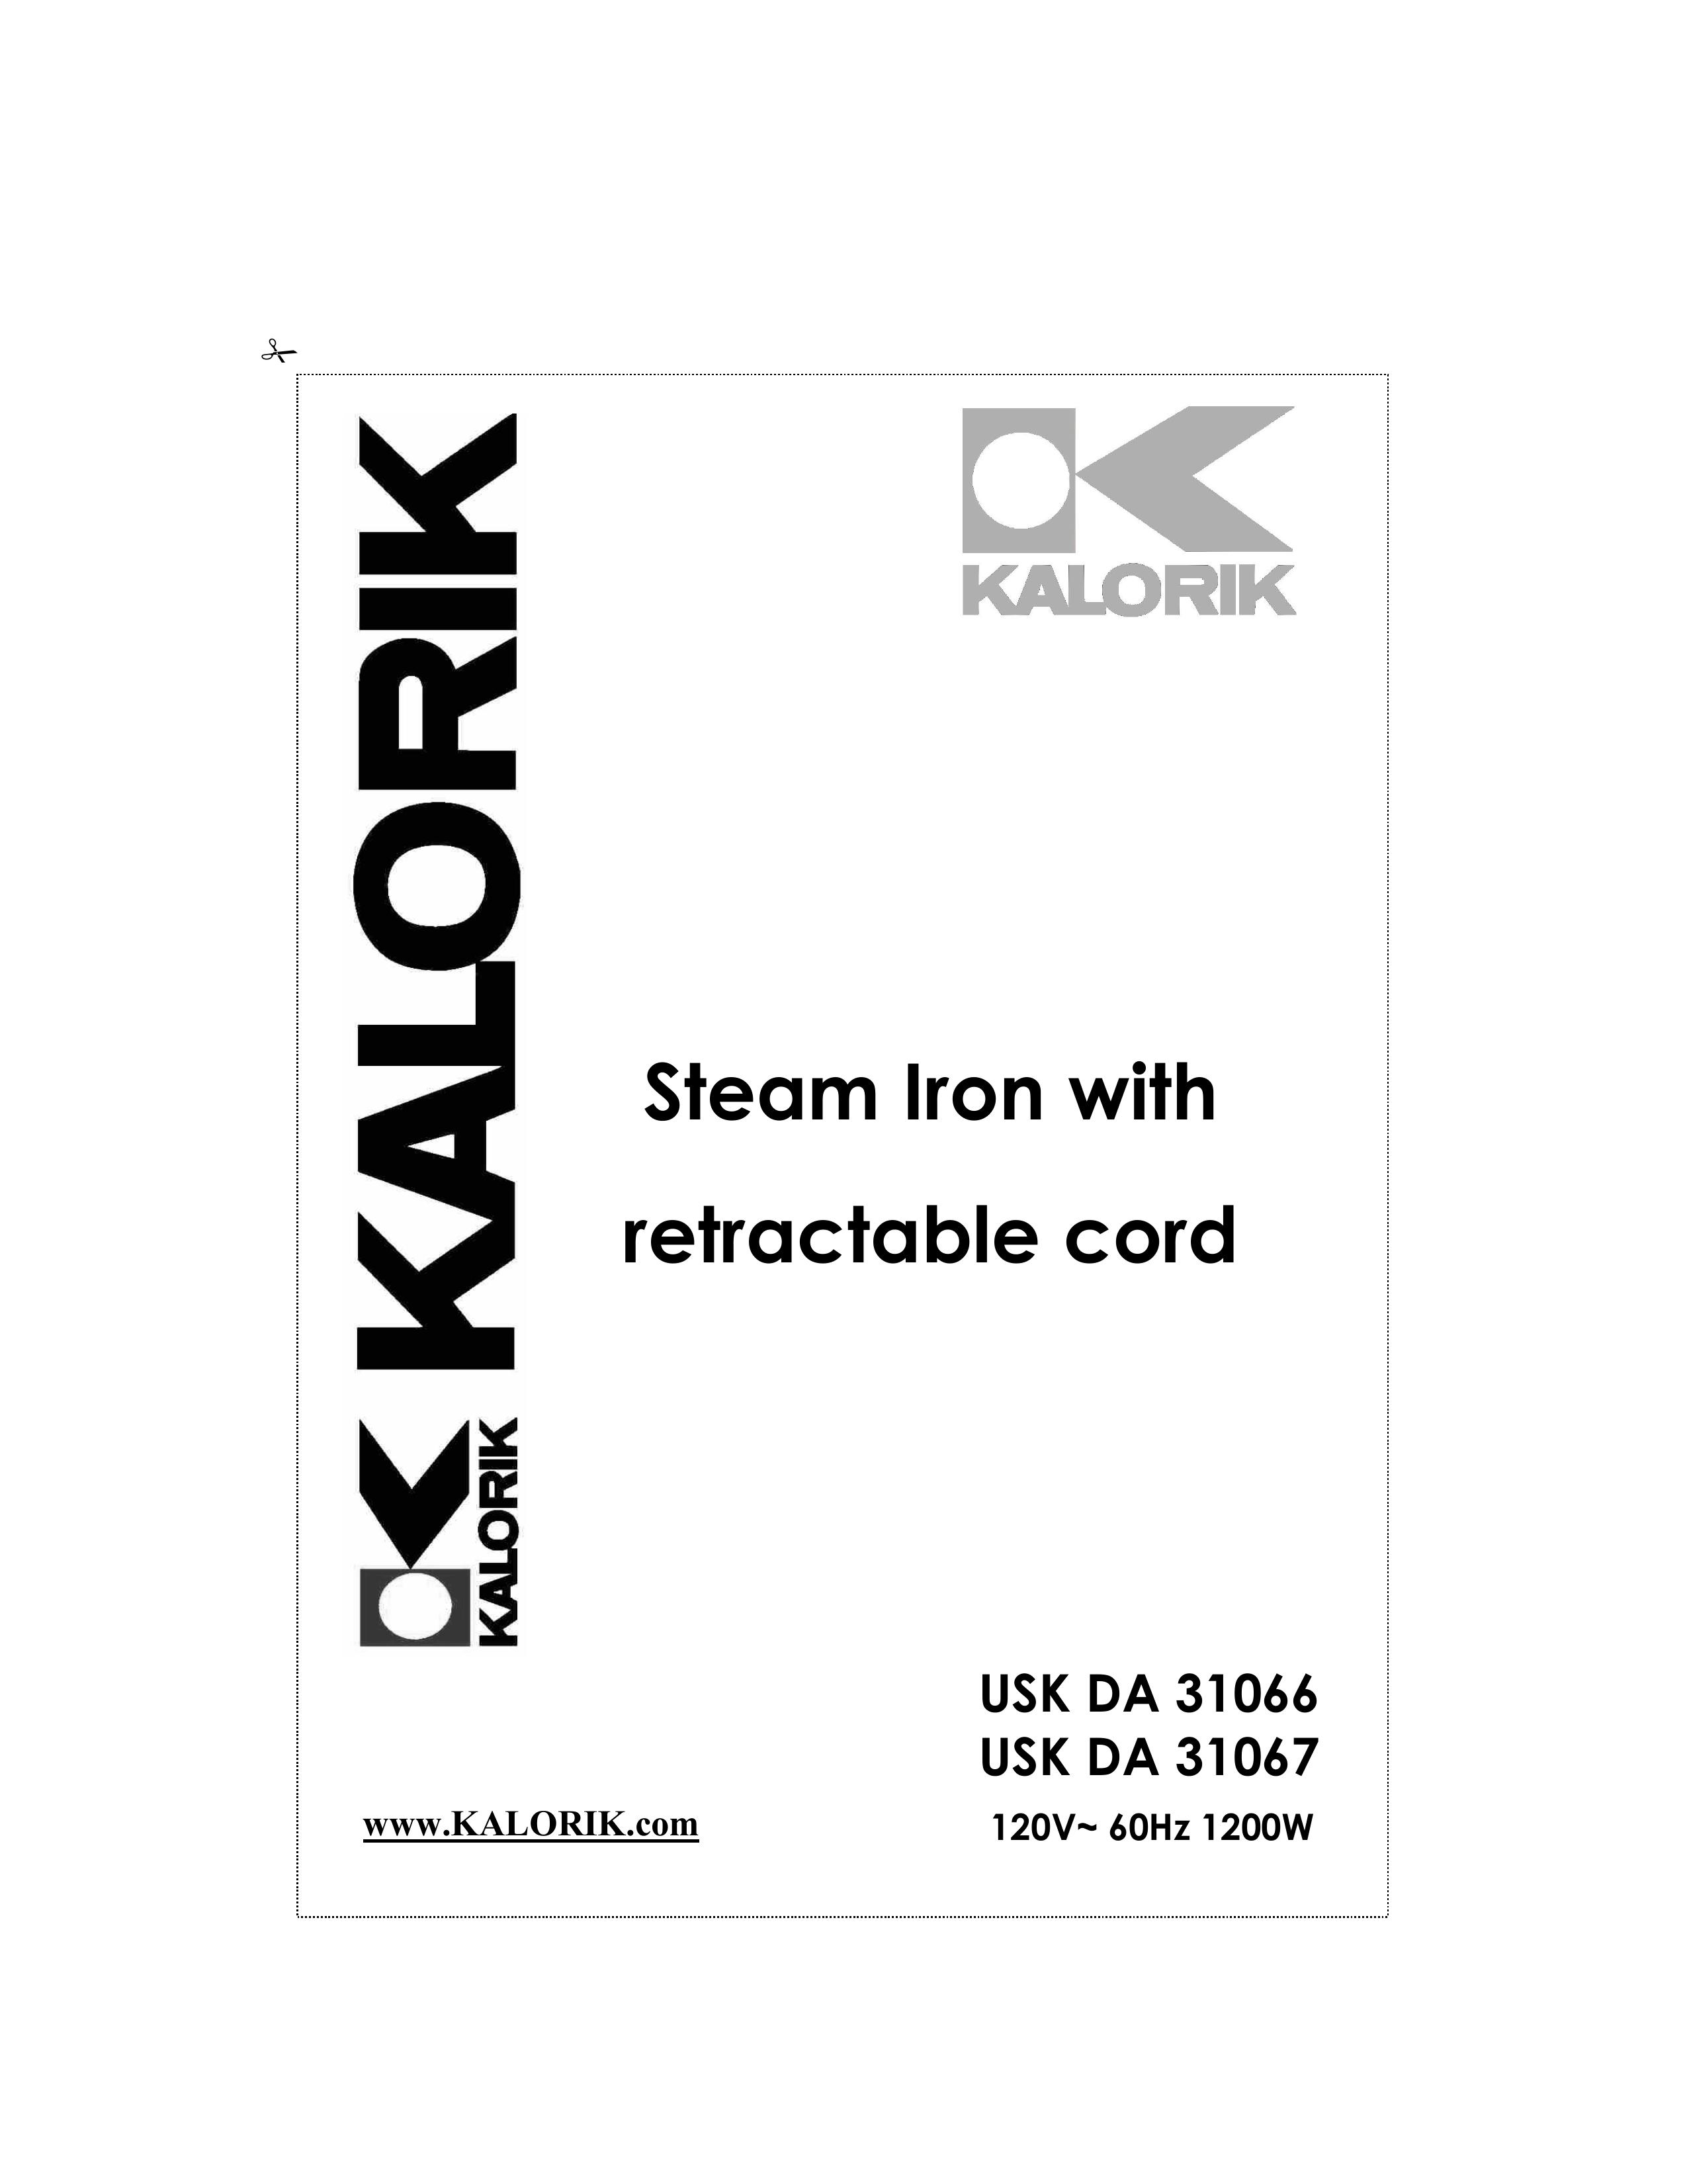 Kalorik USK DA 31066 Iron User Manual